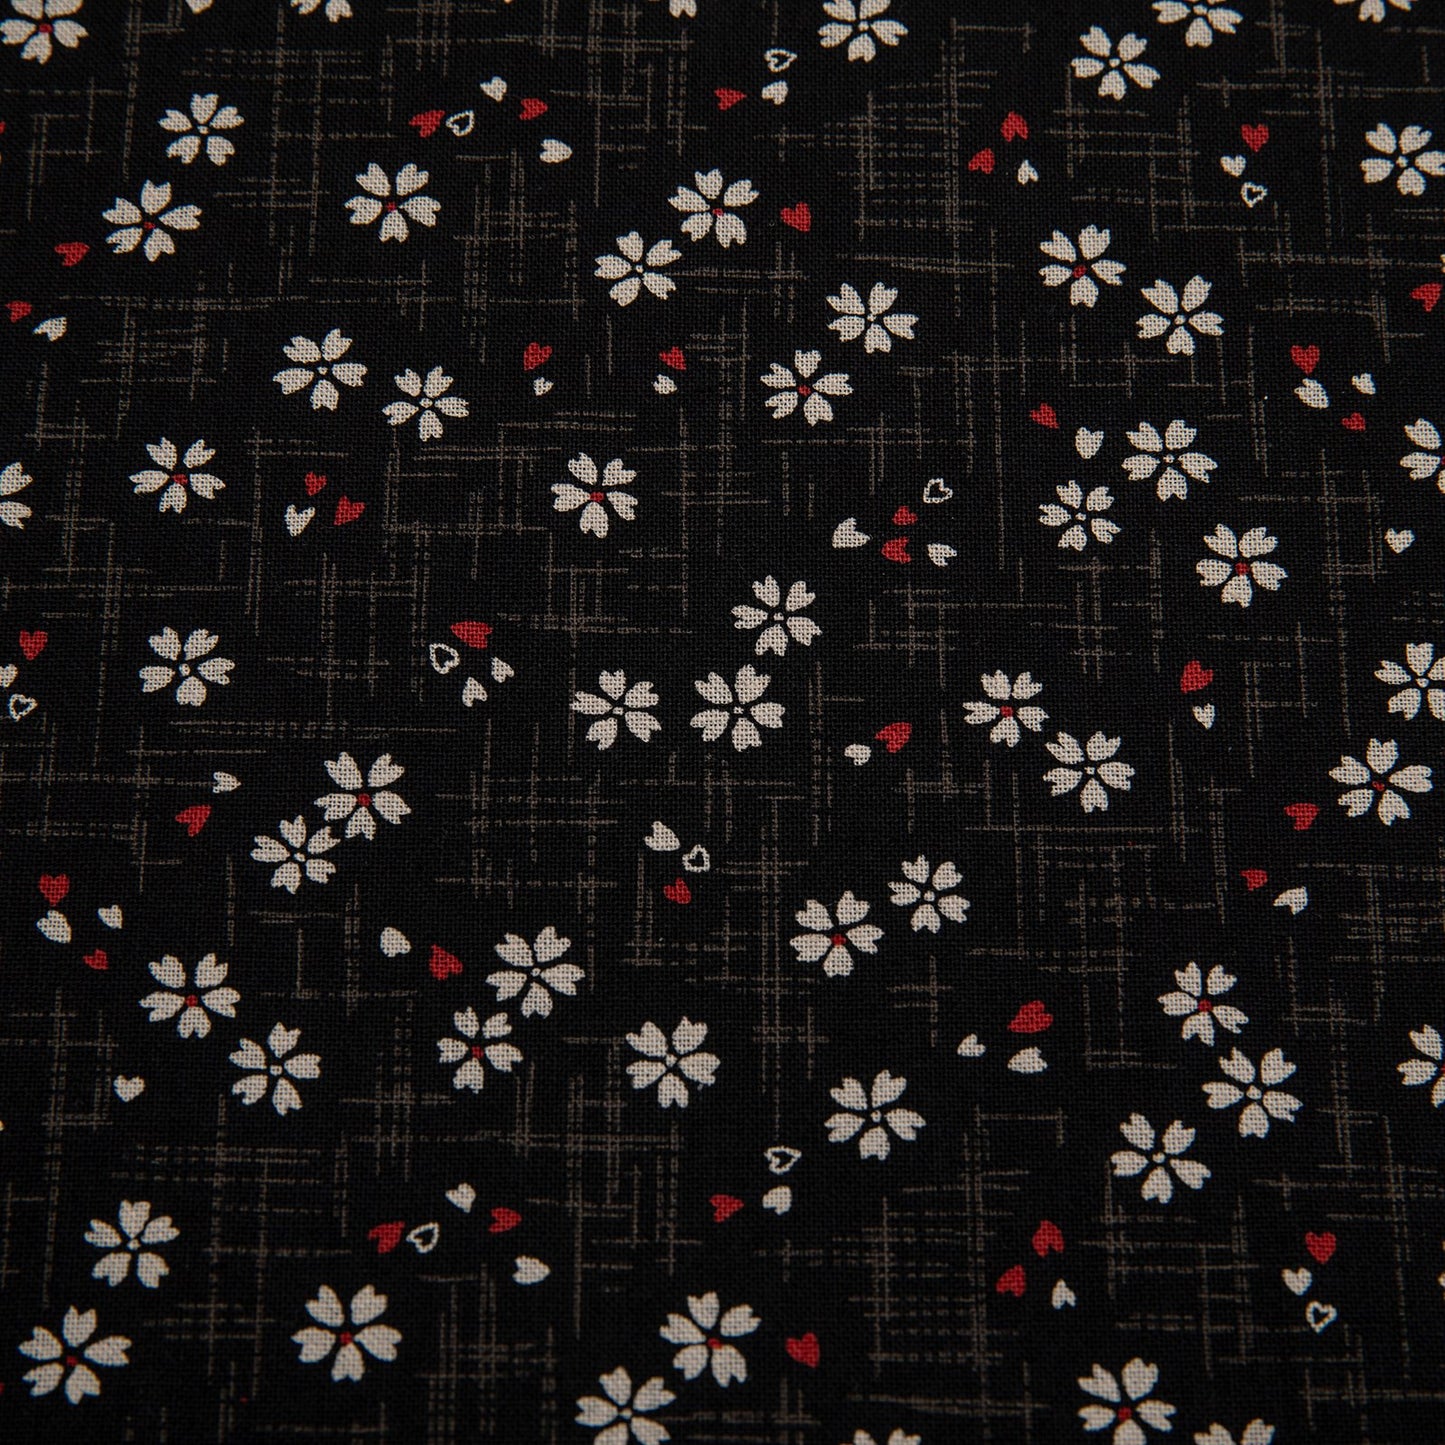 Imported Japanese Fabric - Sakura Charcoal_Fabric_Imported from Japan_100% Cotton_Japanese Sleep System